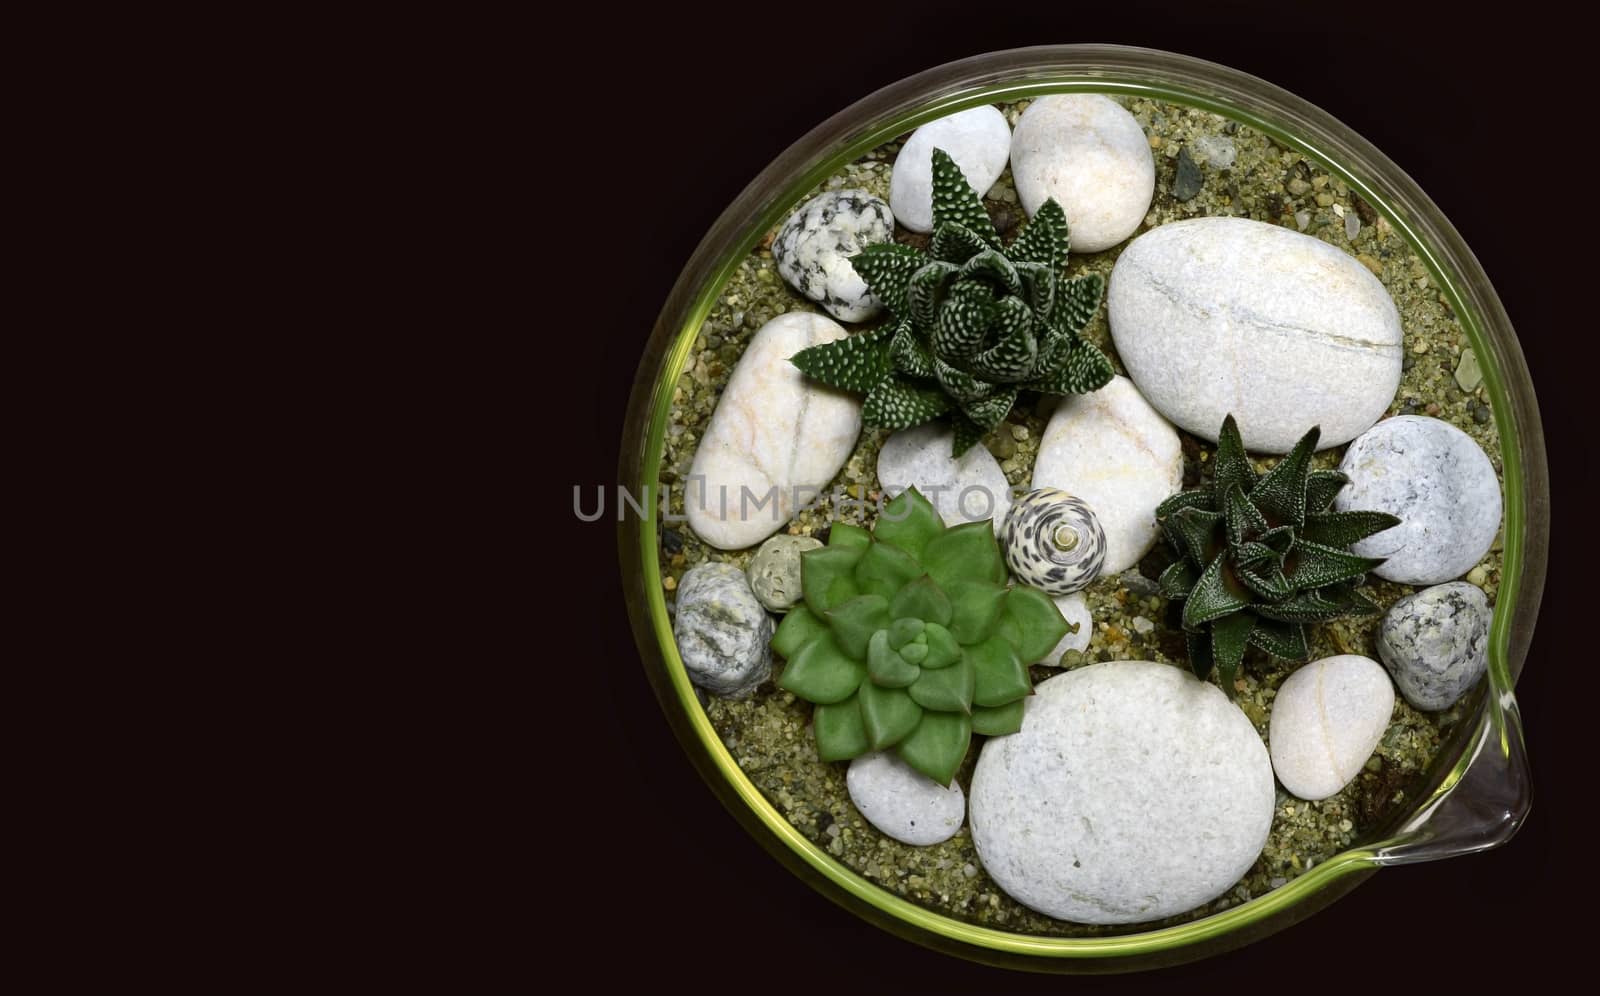 home decorative evergreen plant into glass bowl